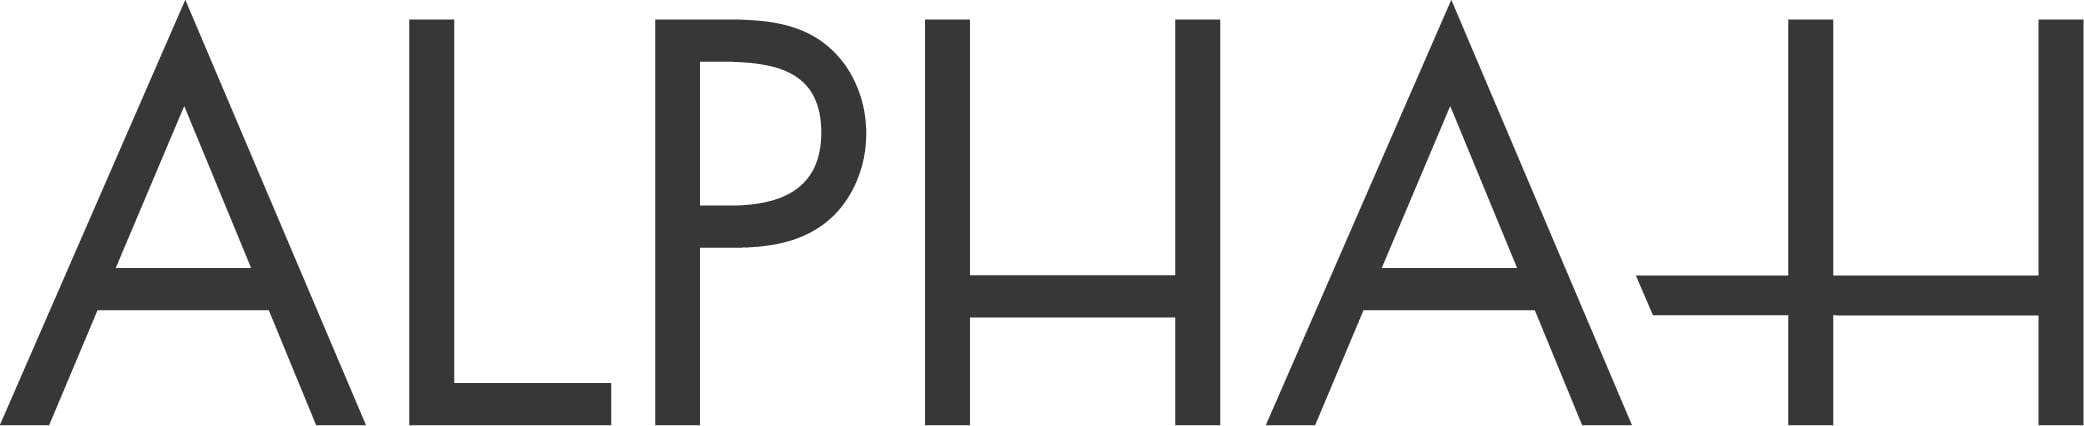 Alpha-H USA logo